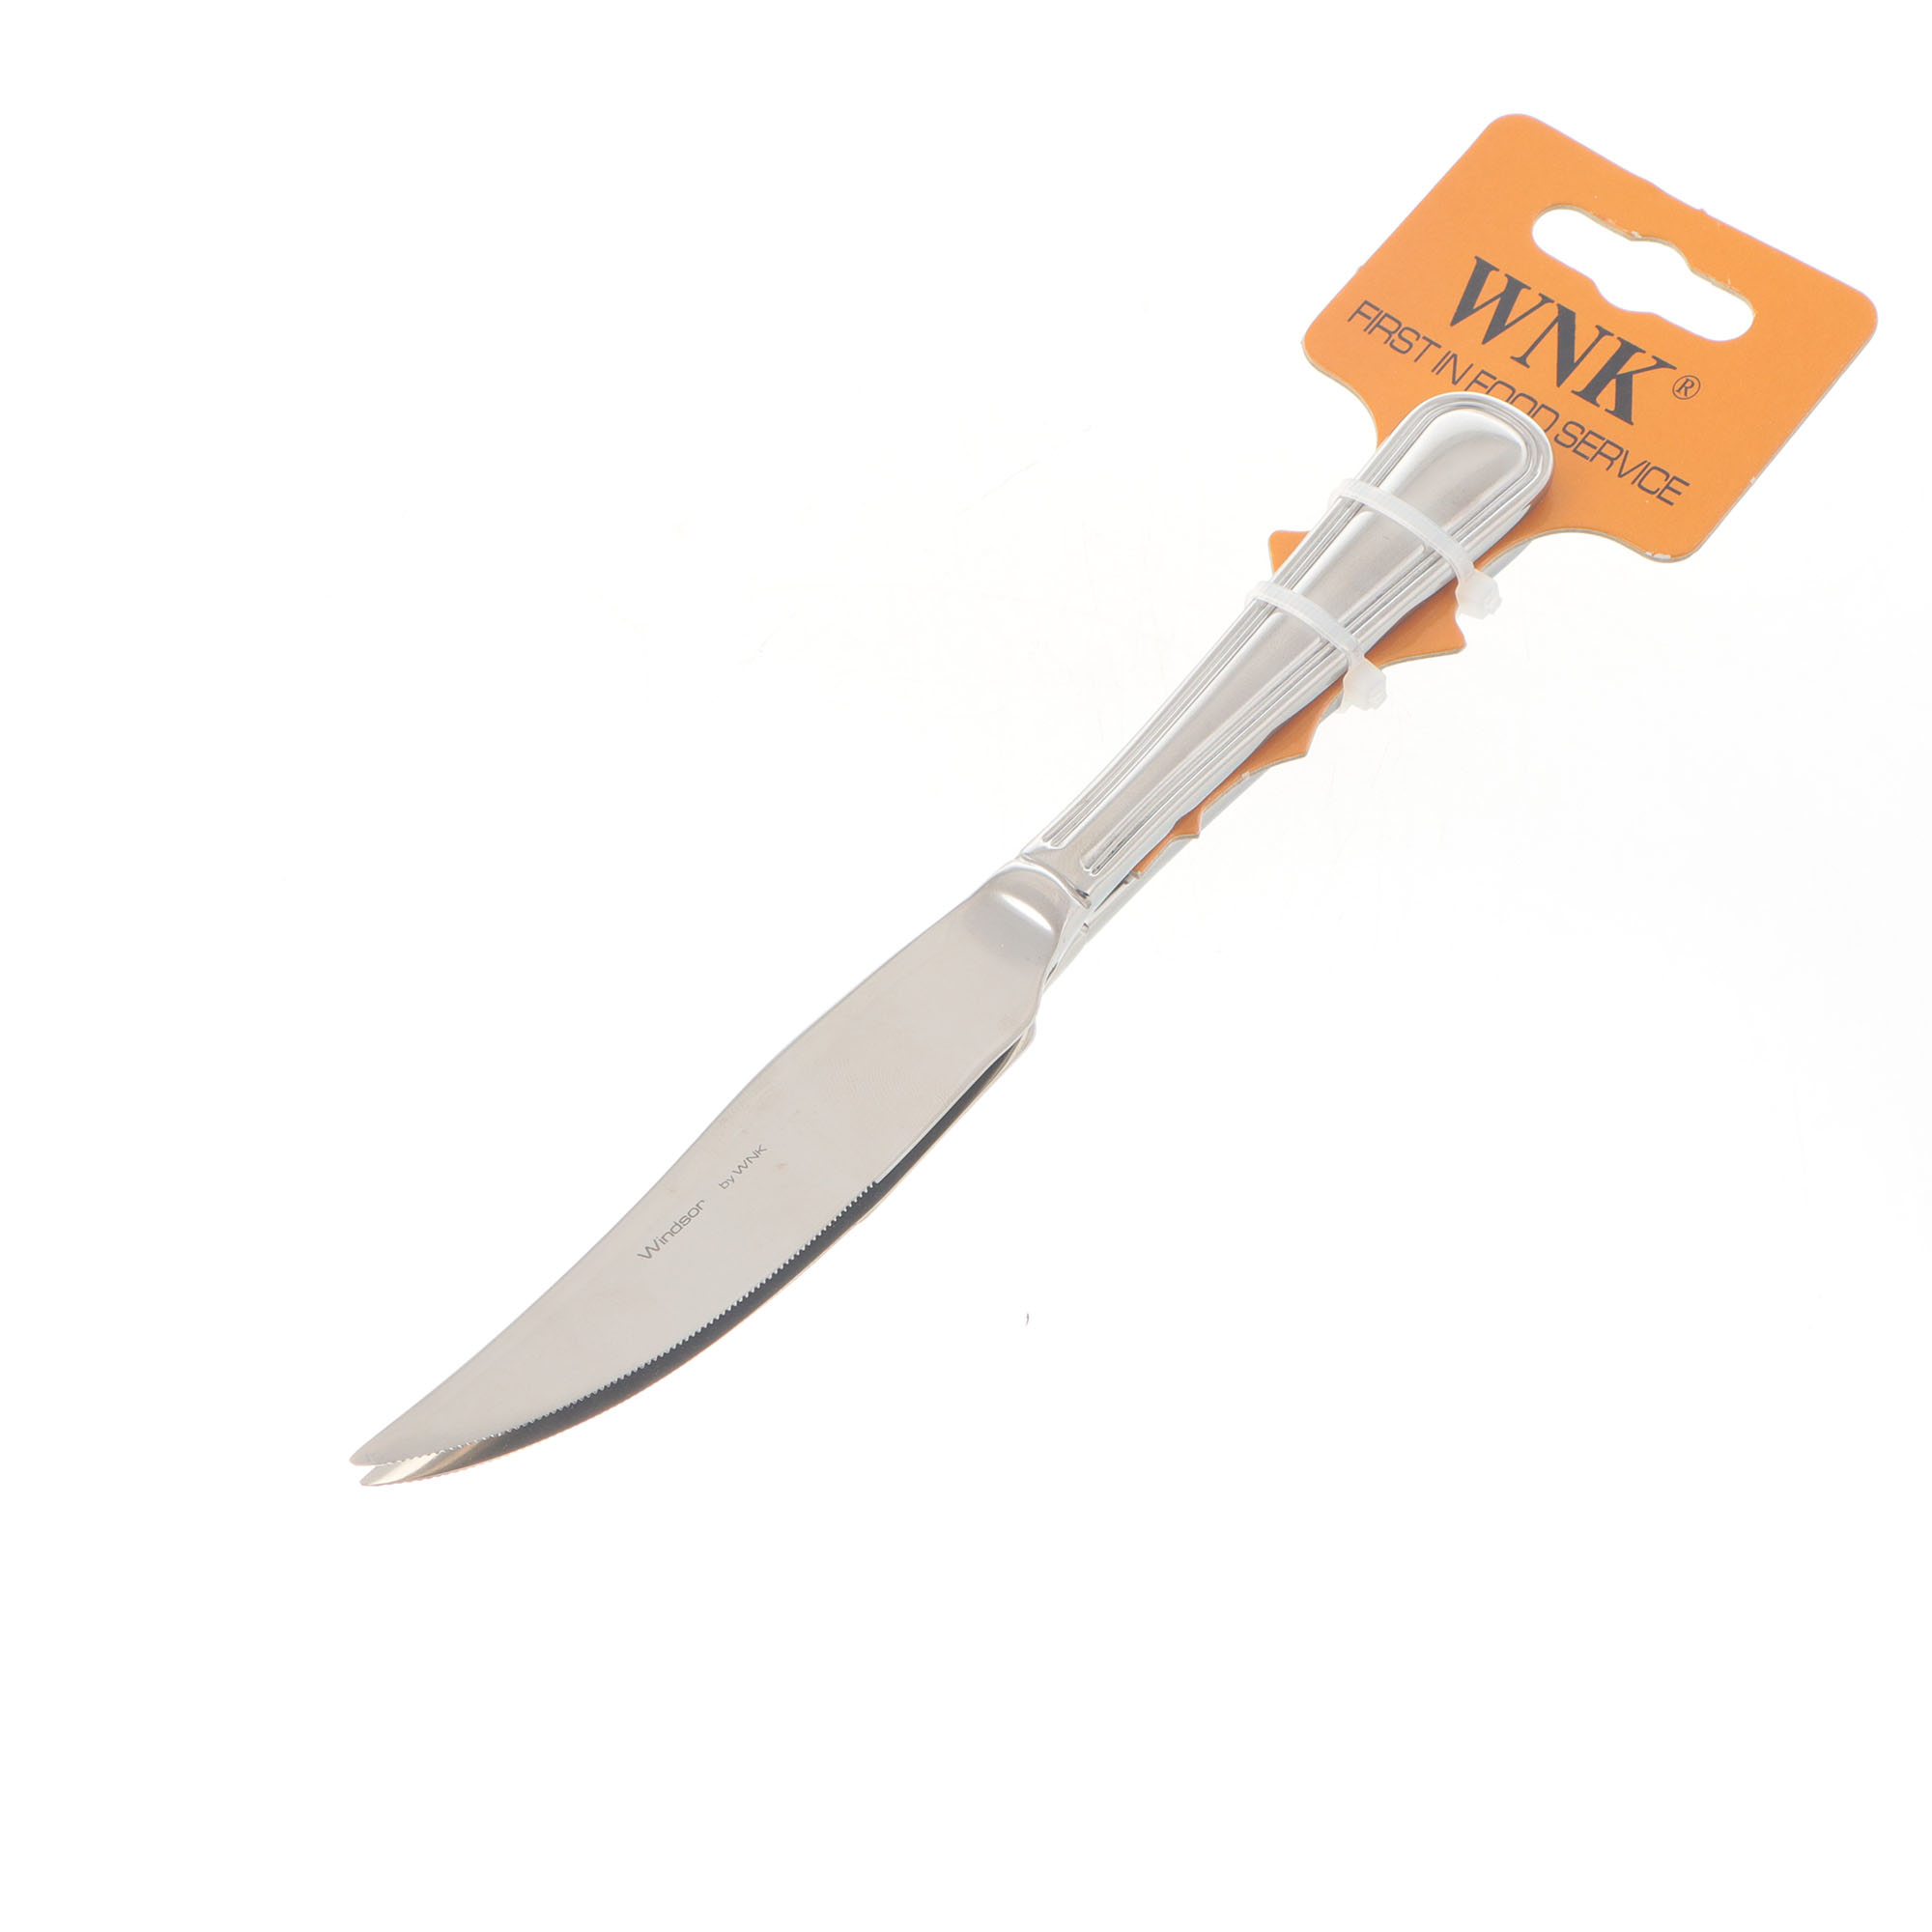 Нож для стейка 21.3см Wnk windsor набор 2шт